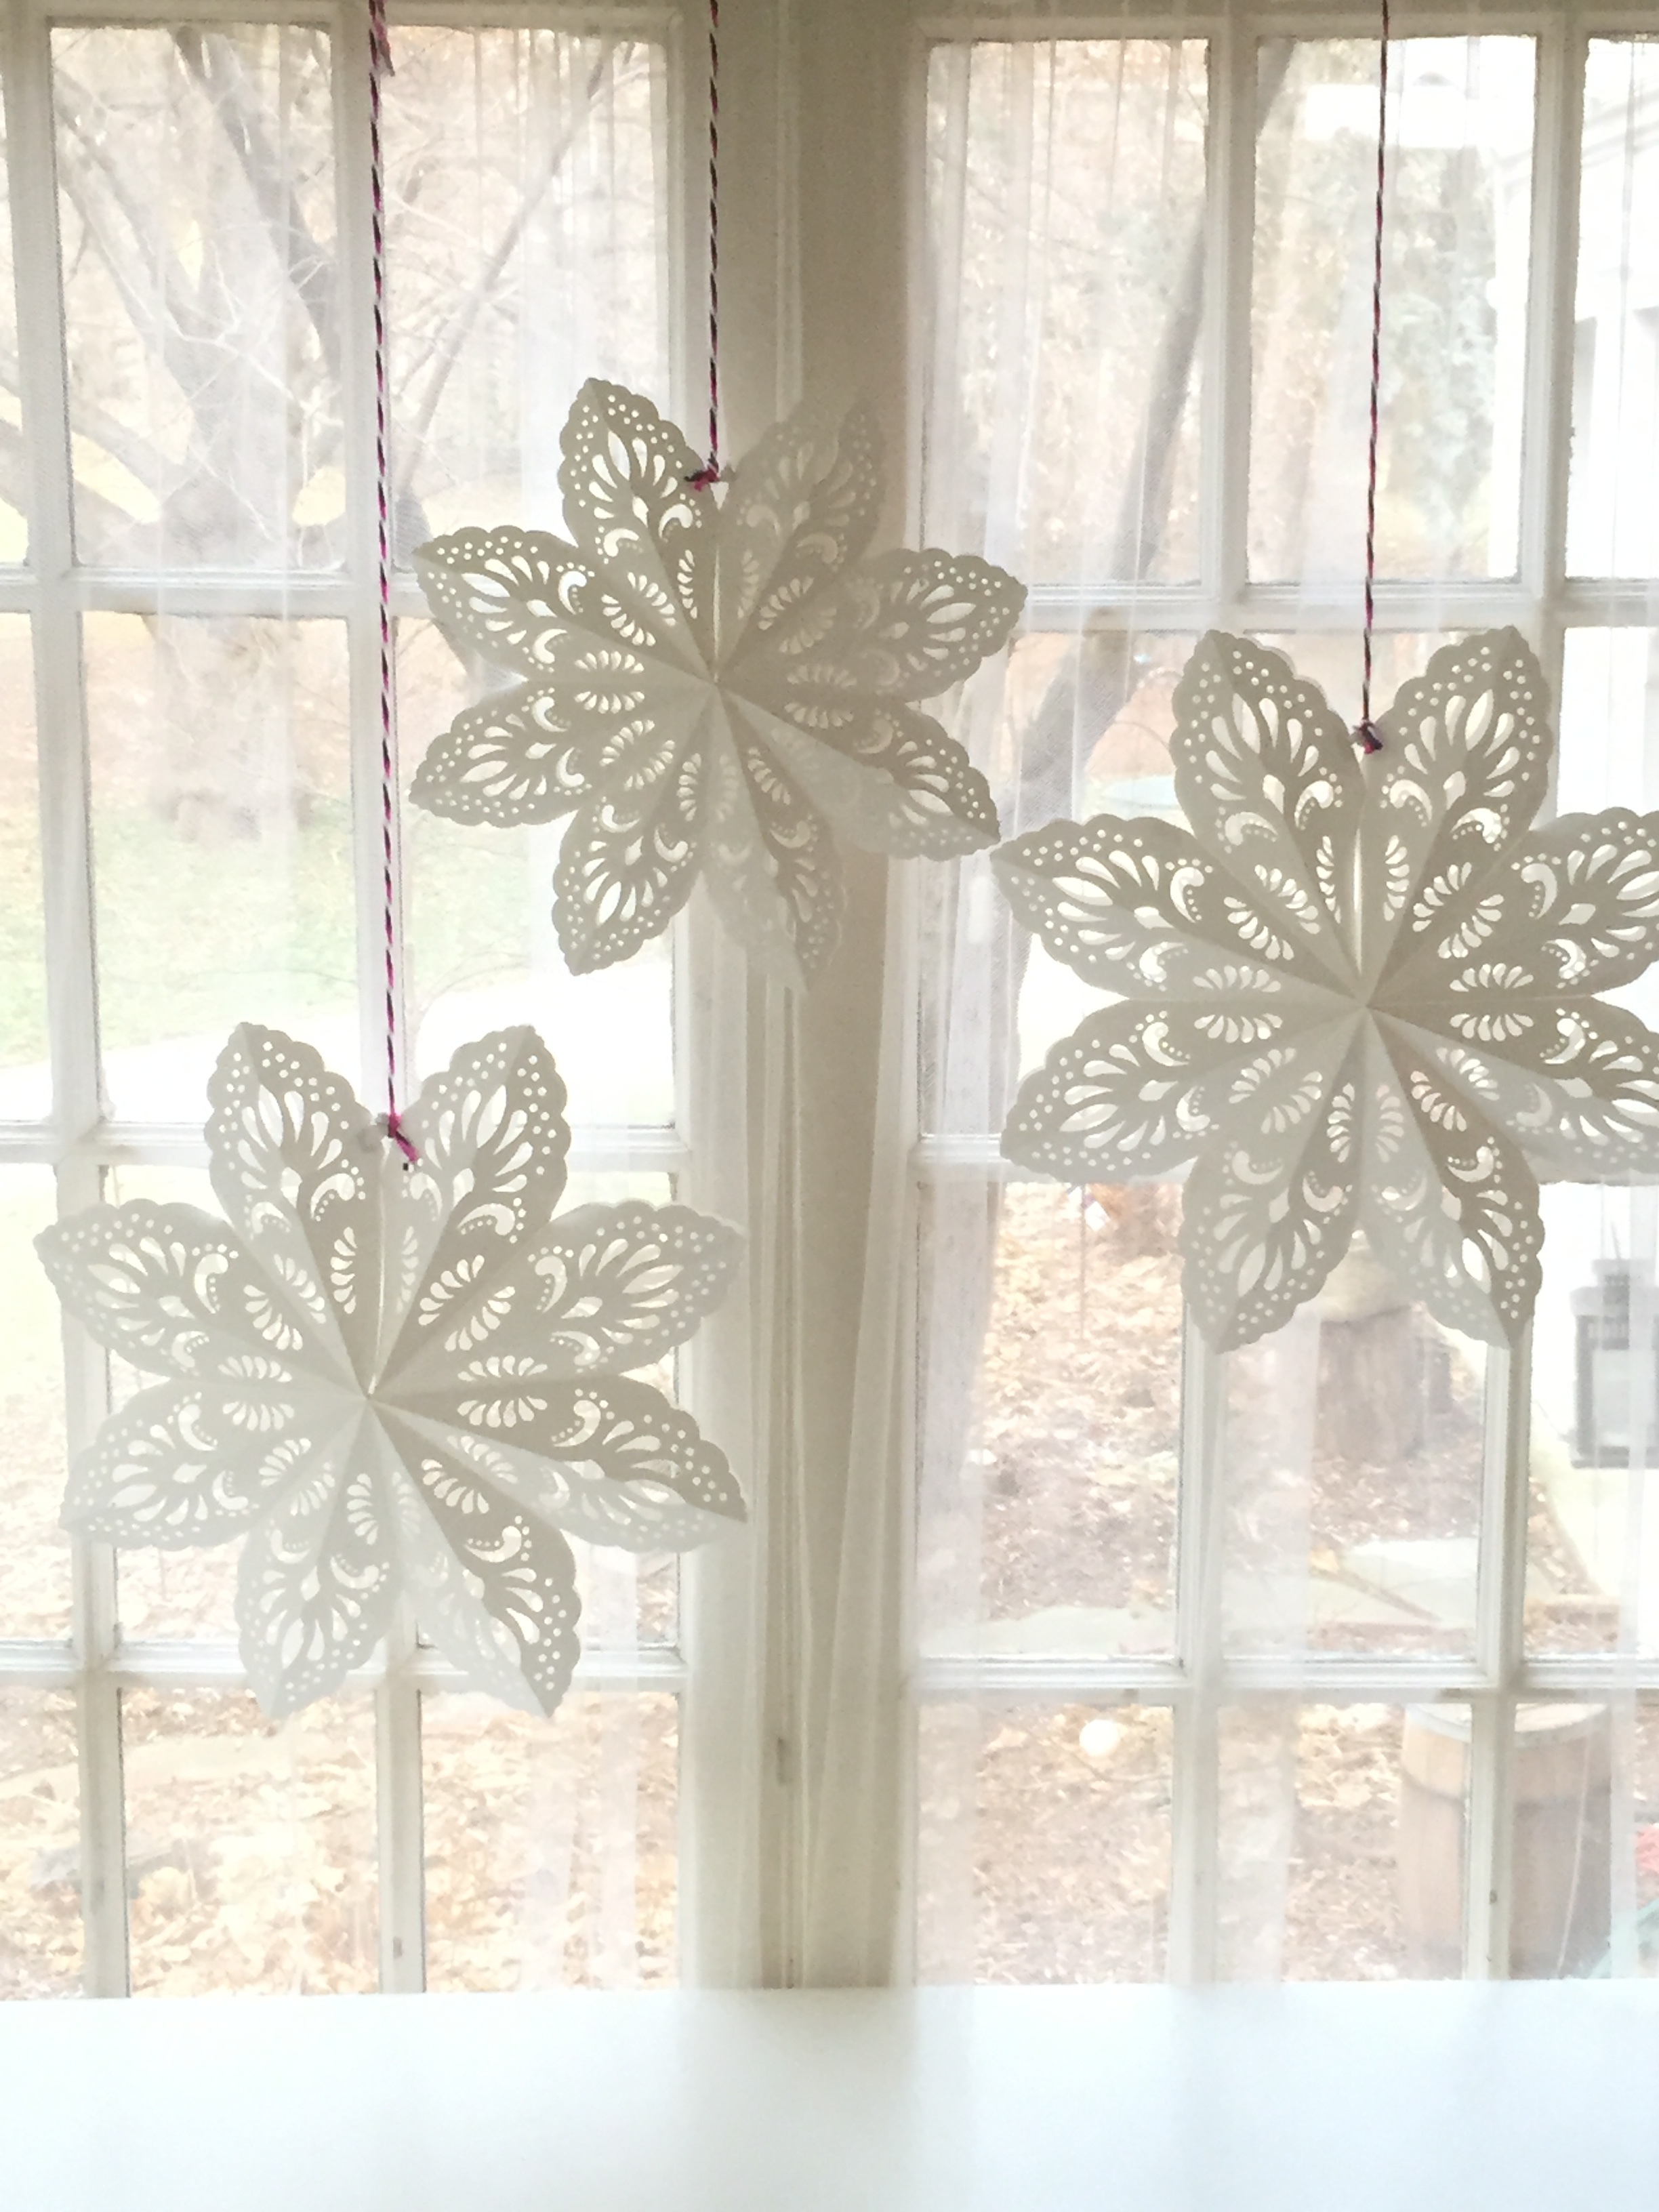 paper snowflakes